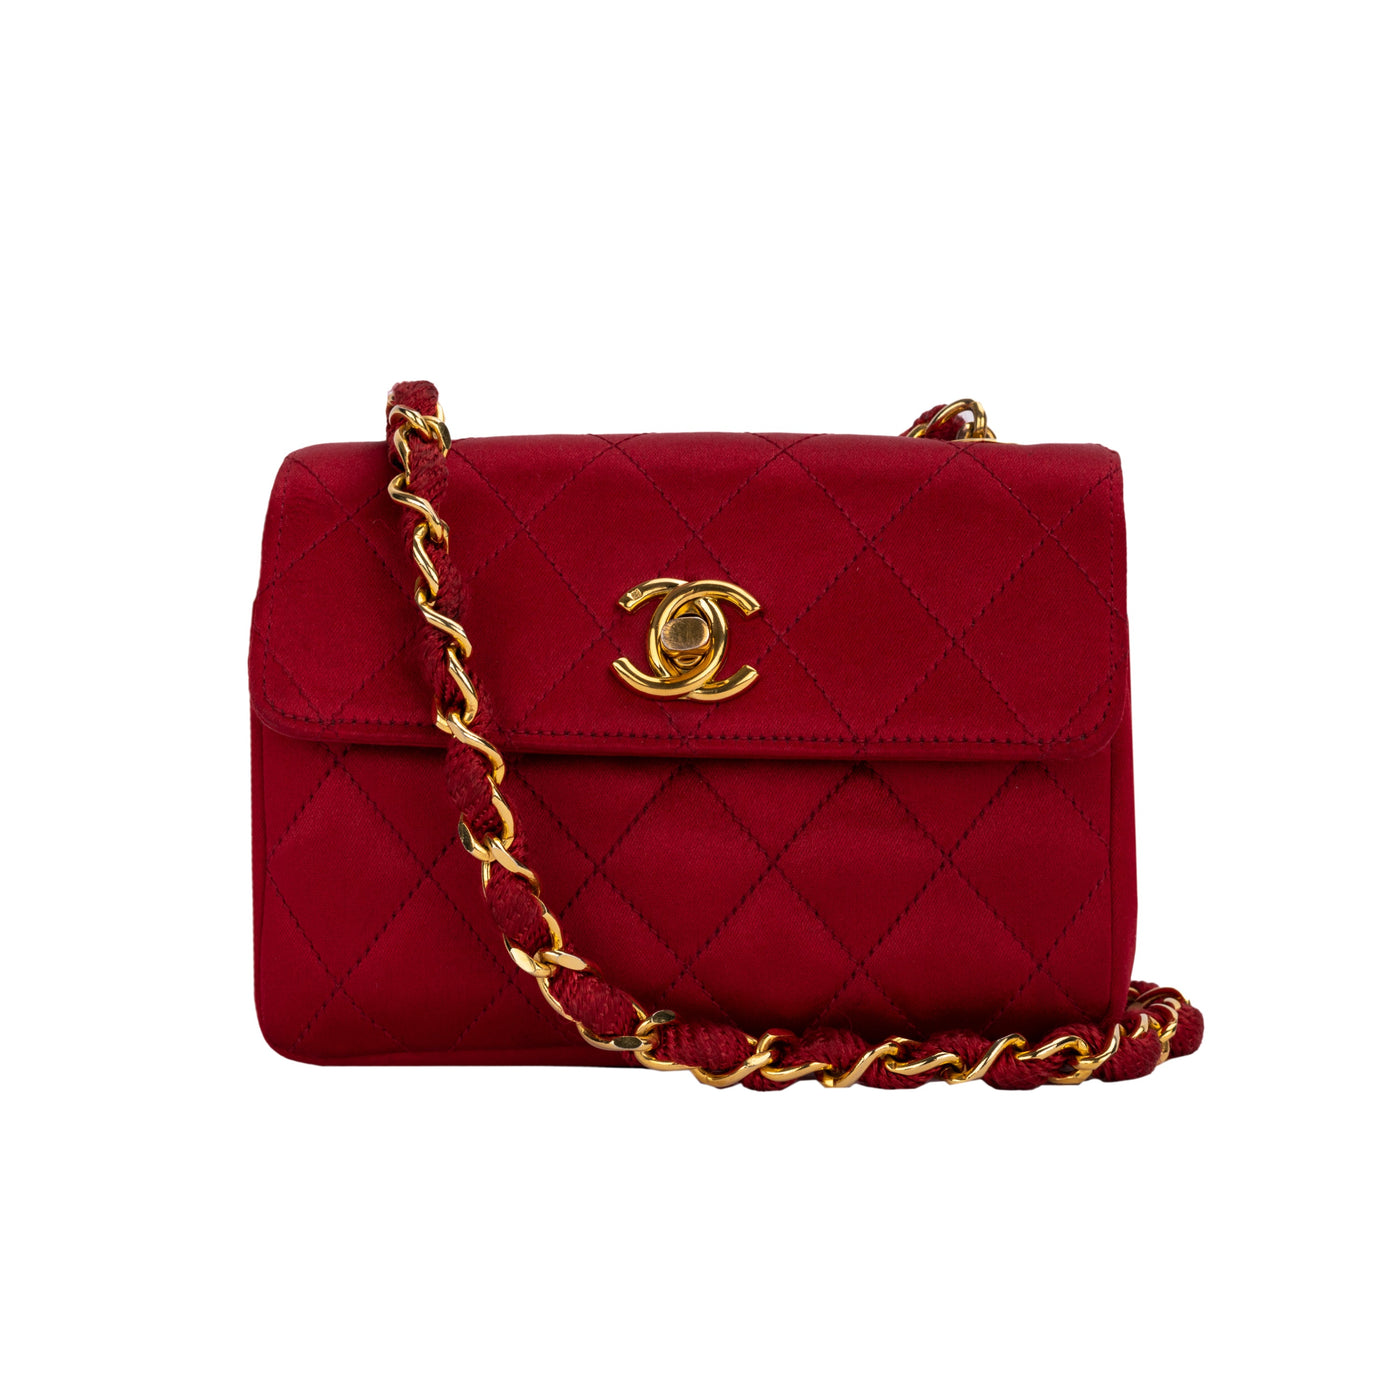 Chanel red satin quilted shoulder flap bag pre-owned nft